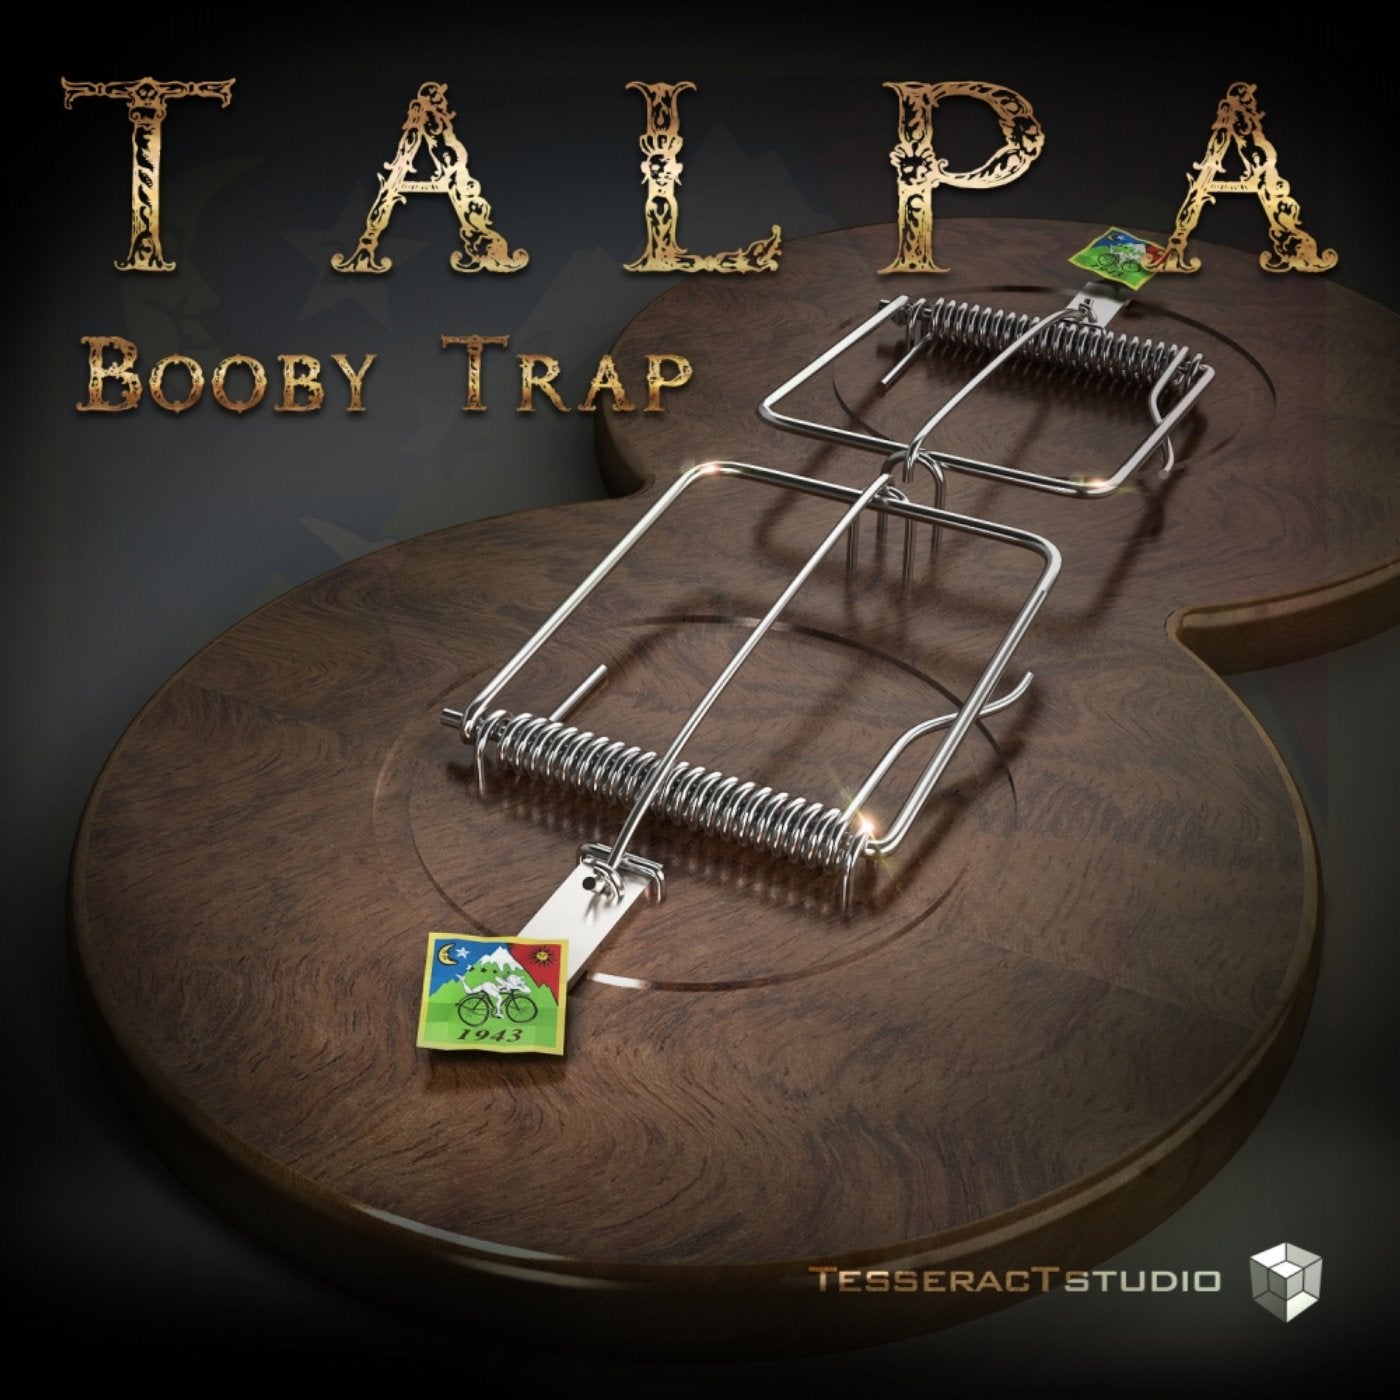 Booby trap. Bob Saget - Booby Trap. 2015 - Talpa - Booby Trap [Ep]. R6 Booby Trap.